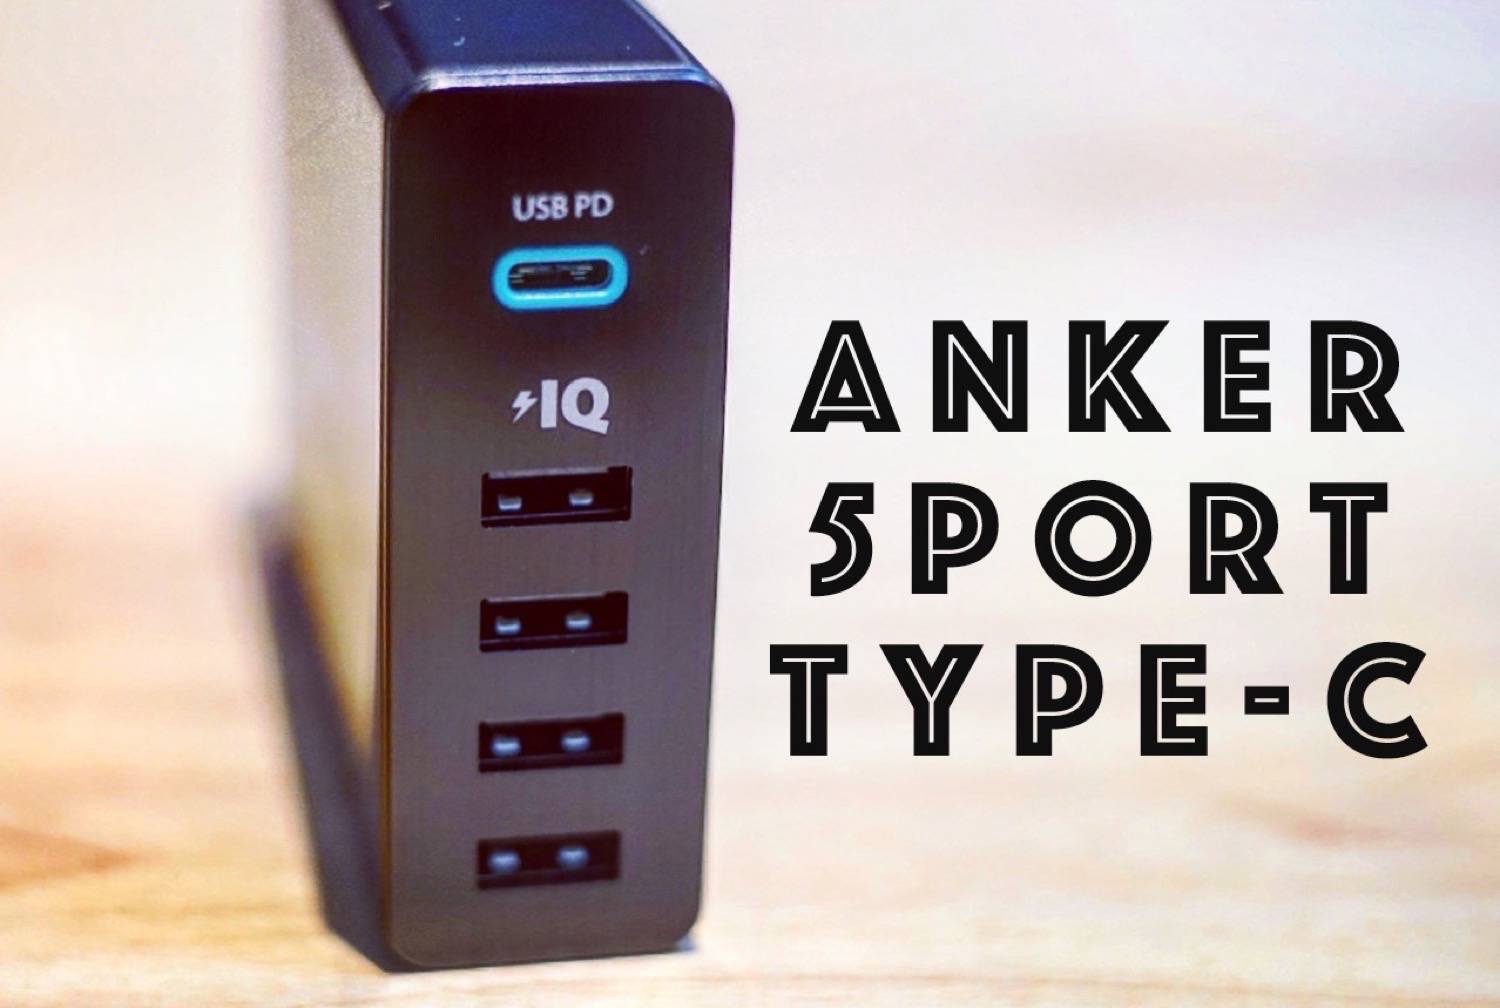 Anker 5port typec10